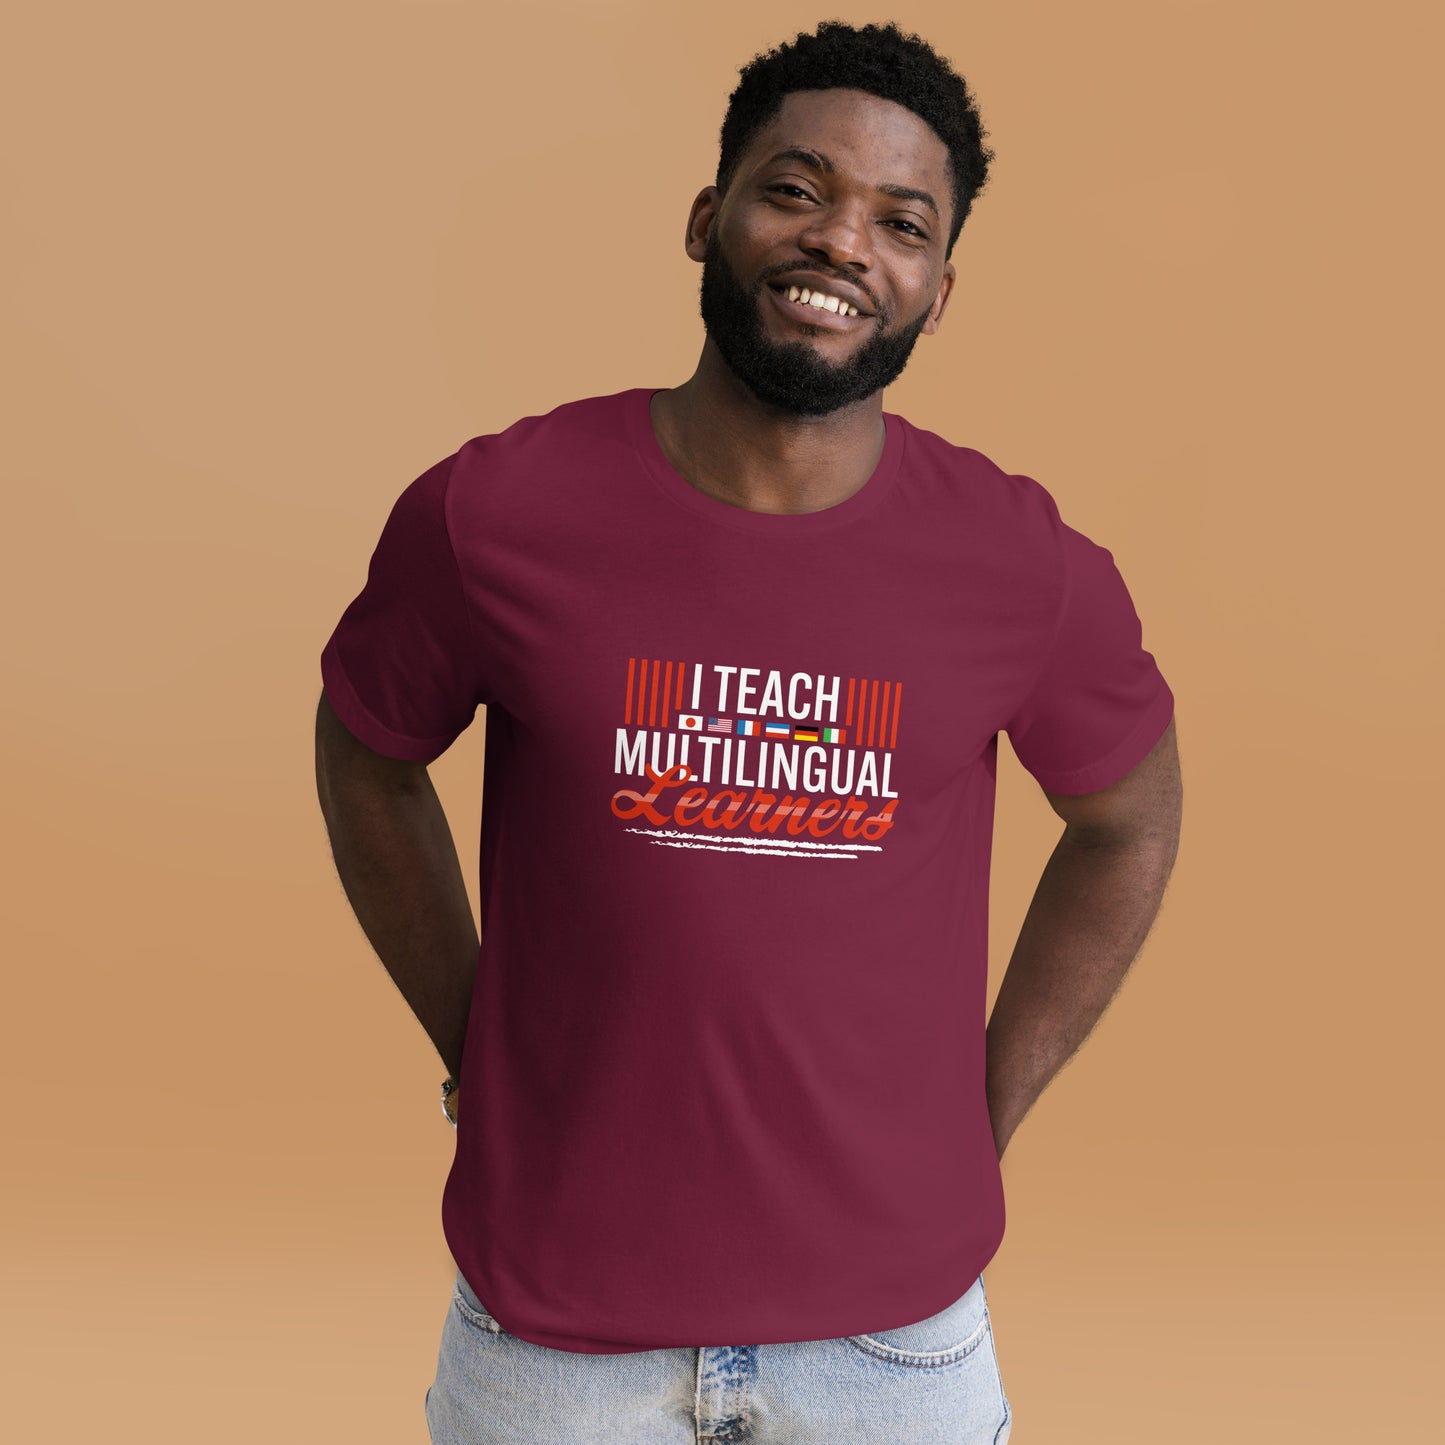 Teach Multilingual Learner t-shirt.